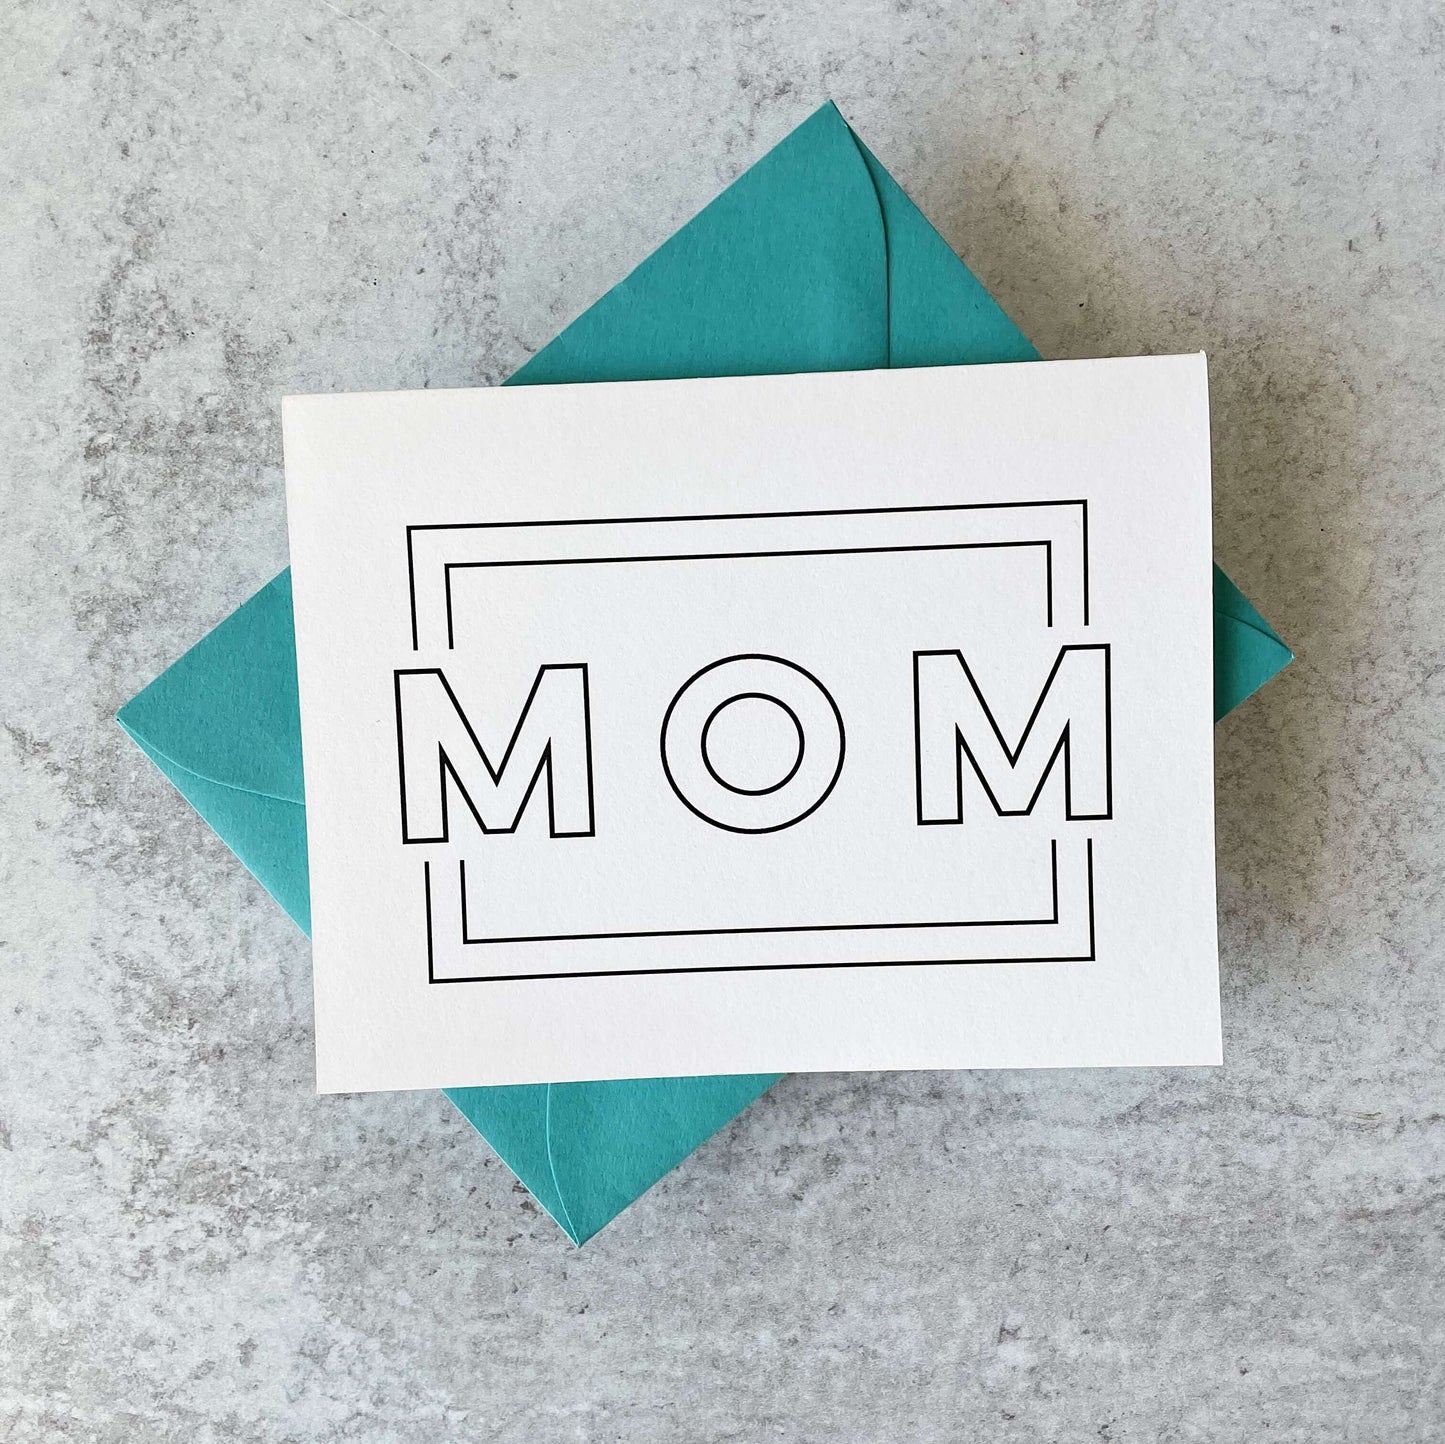 MOM Card